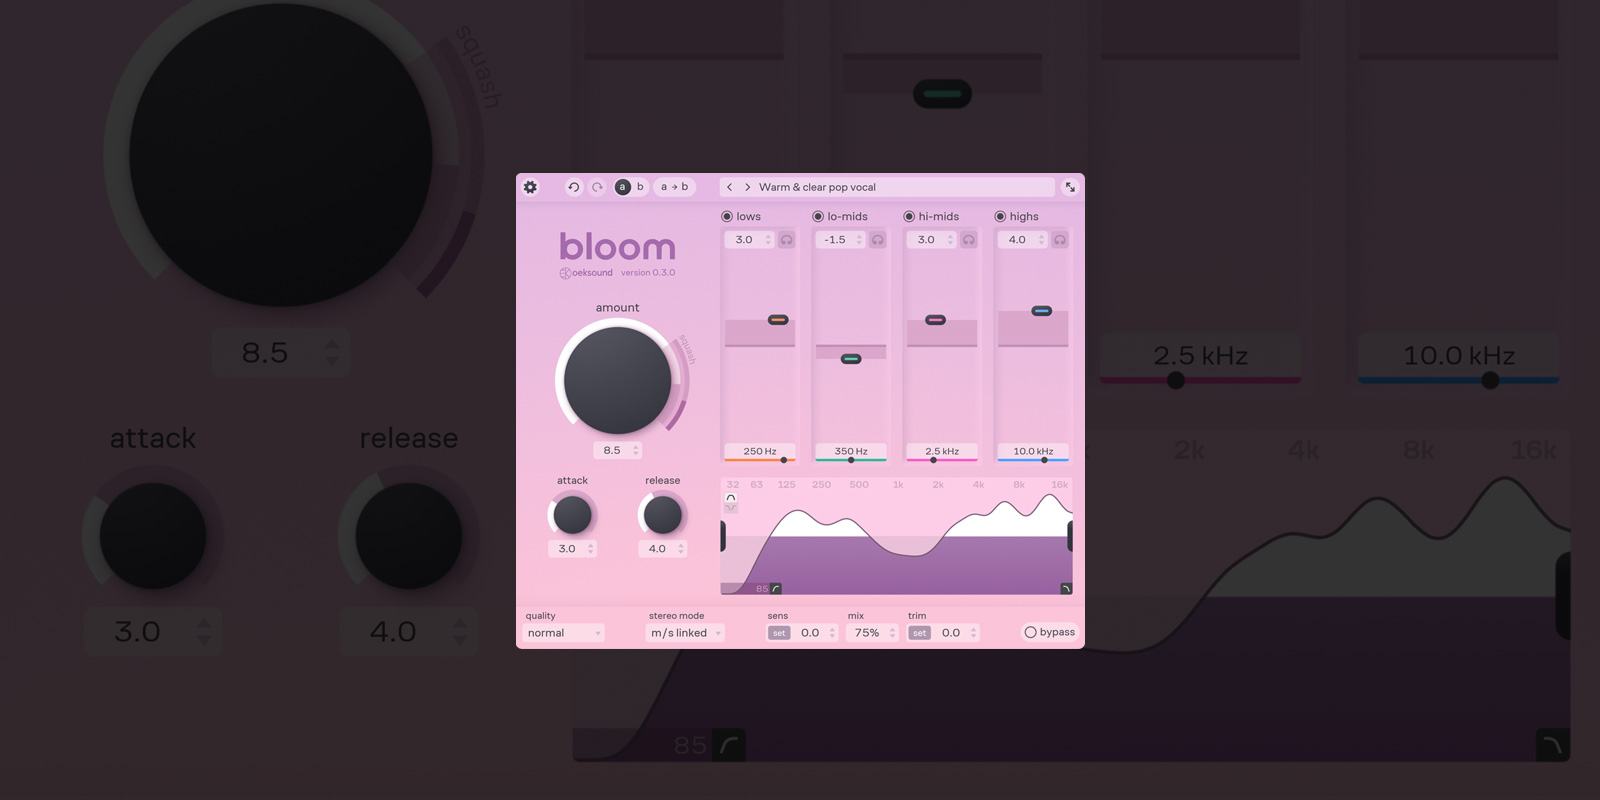 oeksound announces a new plugin: Bloom